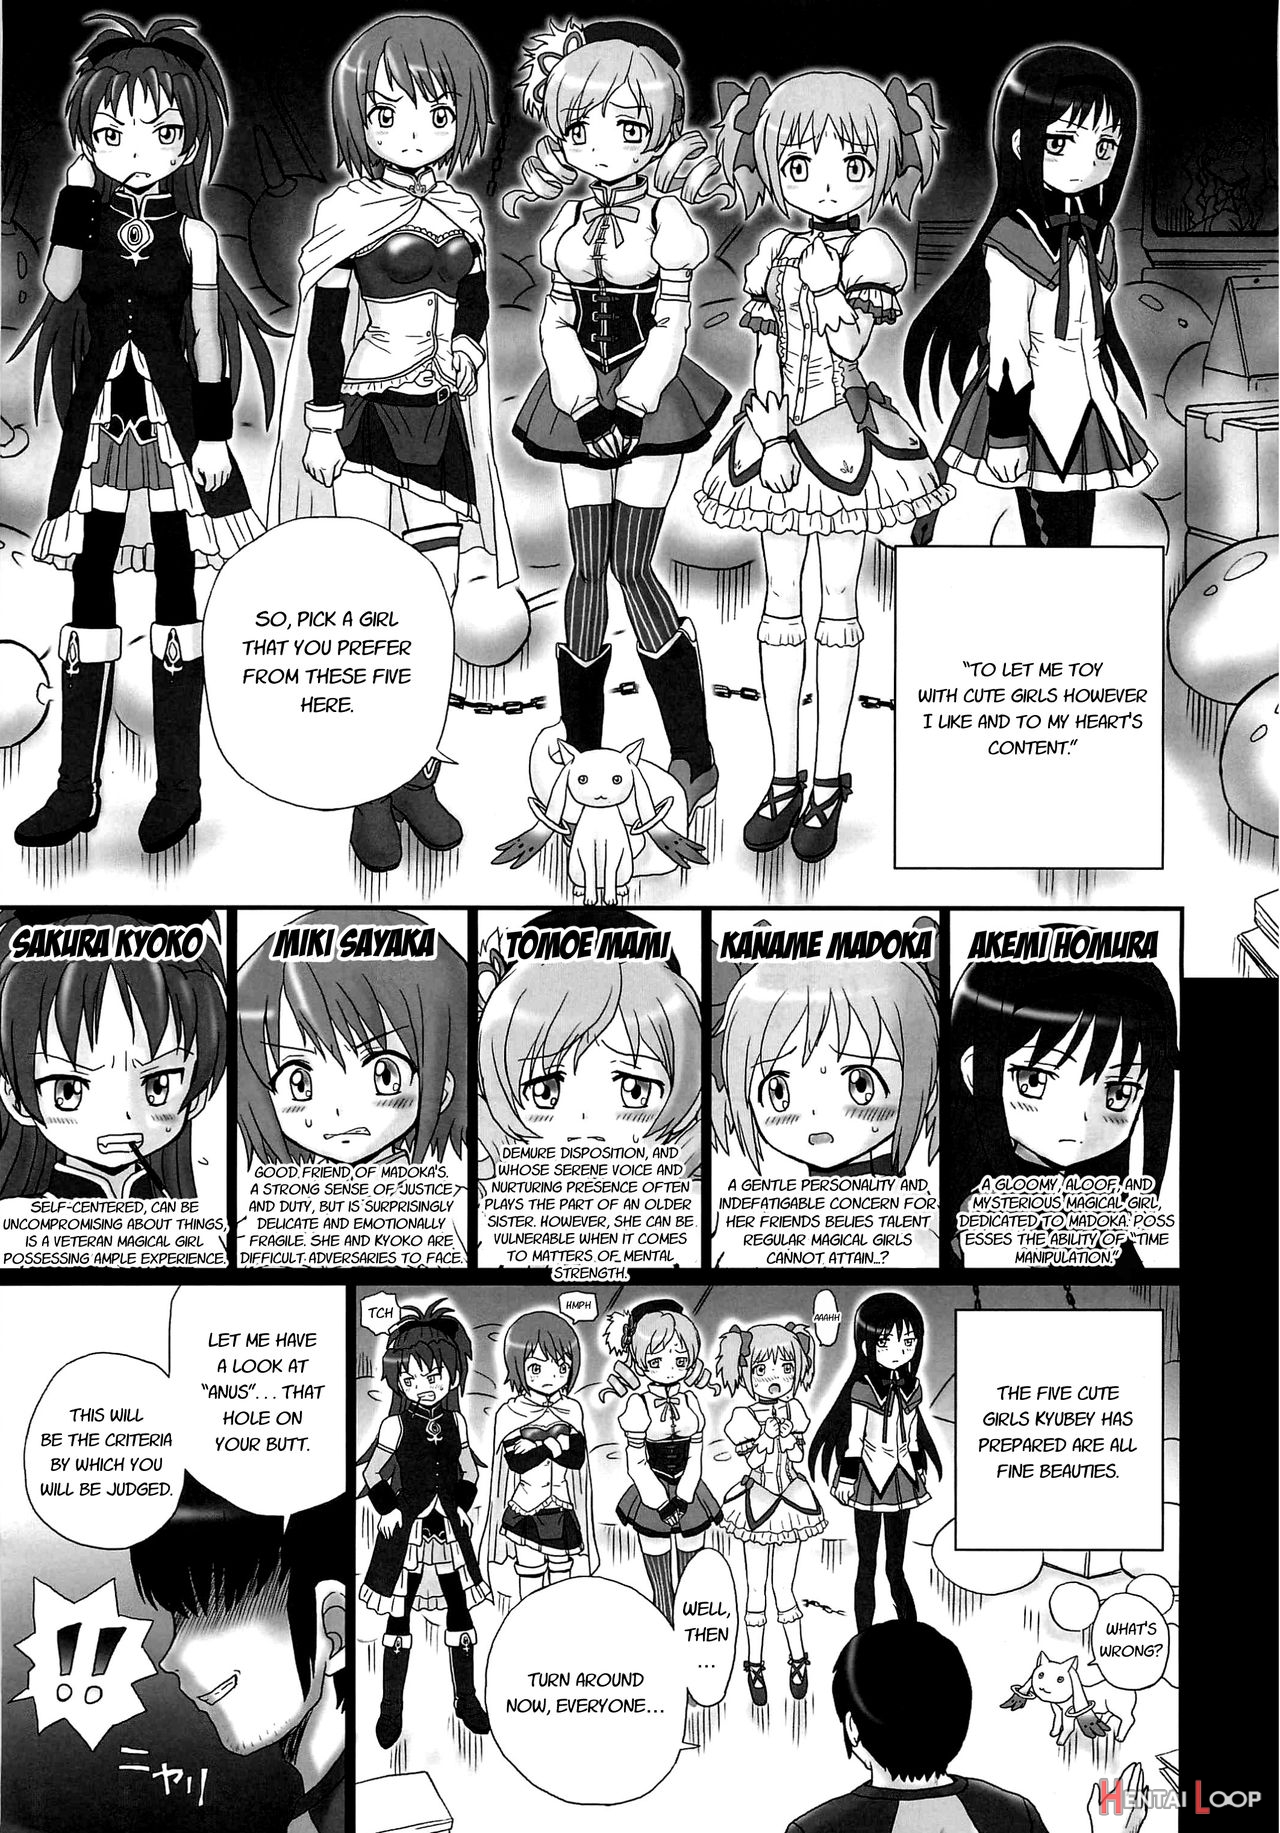 Tail-man Mado★magi 5girls Book page 4